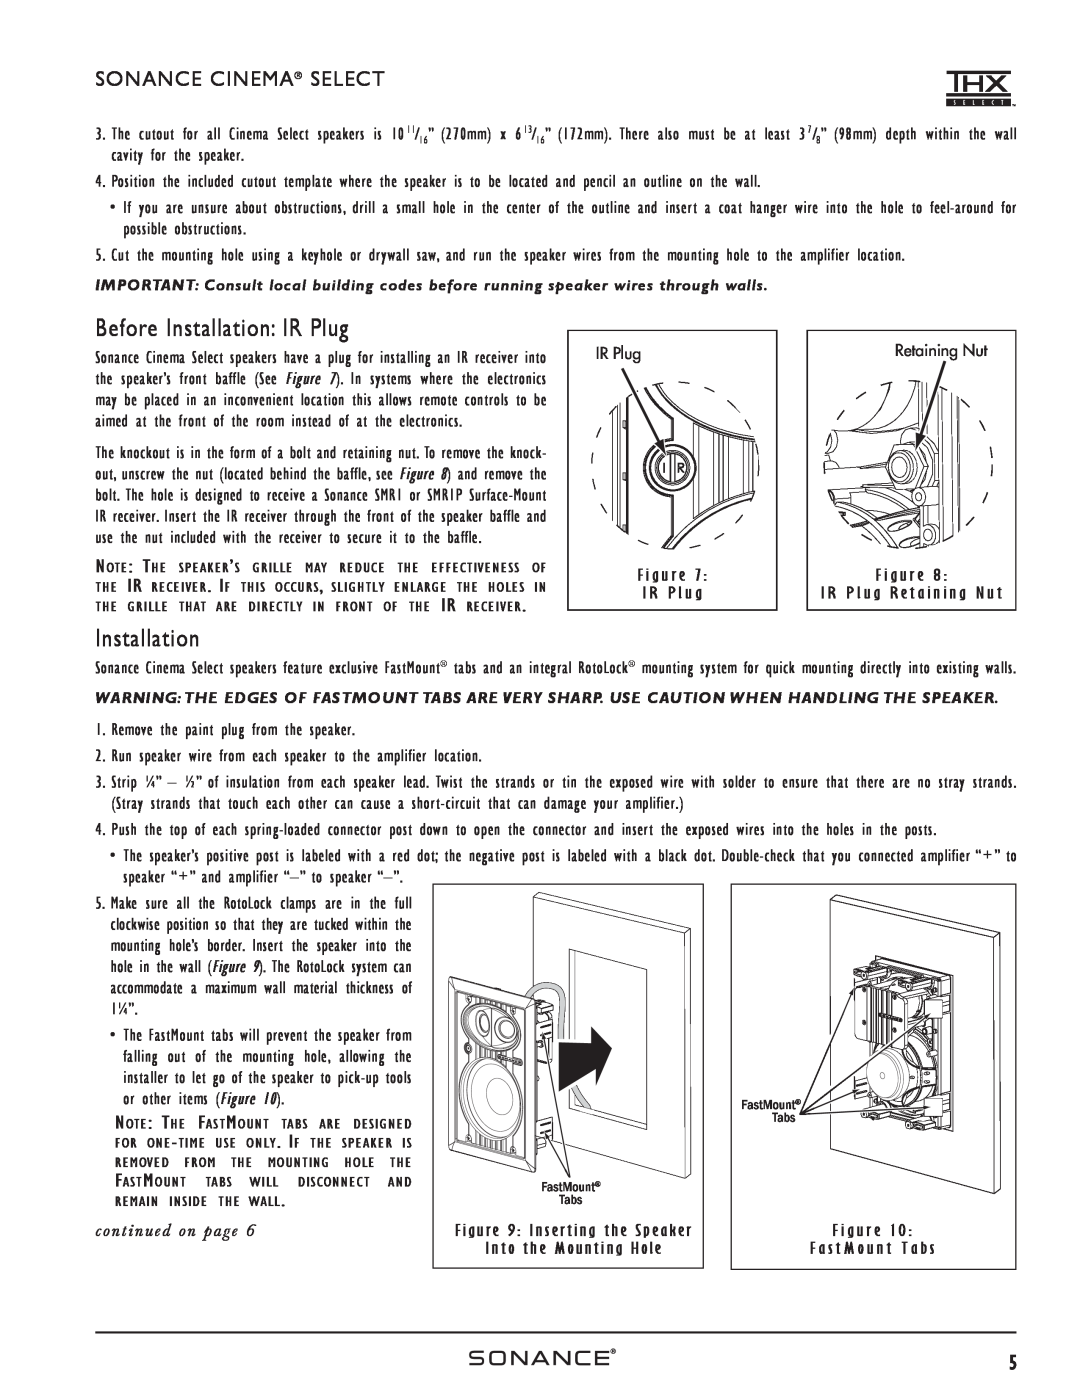 Sonance HOME THEATER SPEAKERS instruction manual Before Installation IR Plug, Sonance Cinema Select 